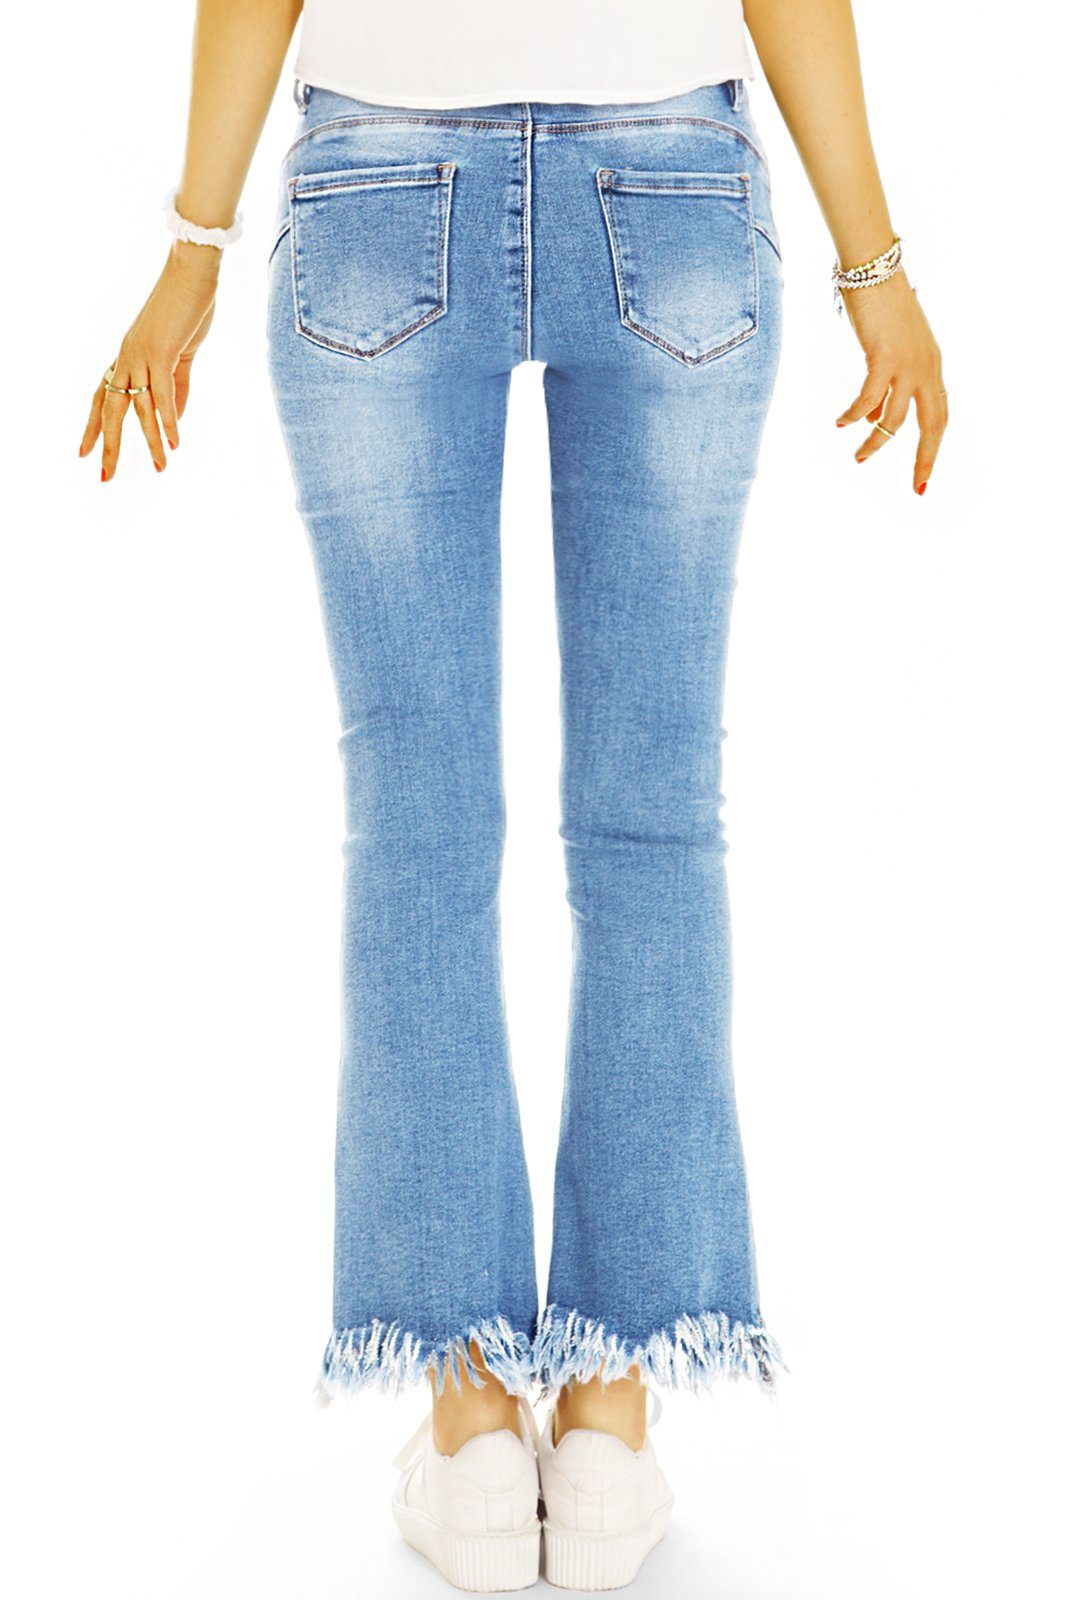 be styled - Hosen, Jeans Stretch-Anteil, Bootcut Ankle-Jeans Jeans Ankle j38p Damen - stretchig medium mit waist 5-Pocket-Style